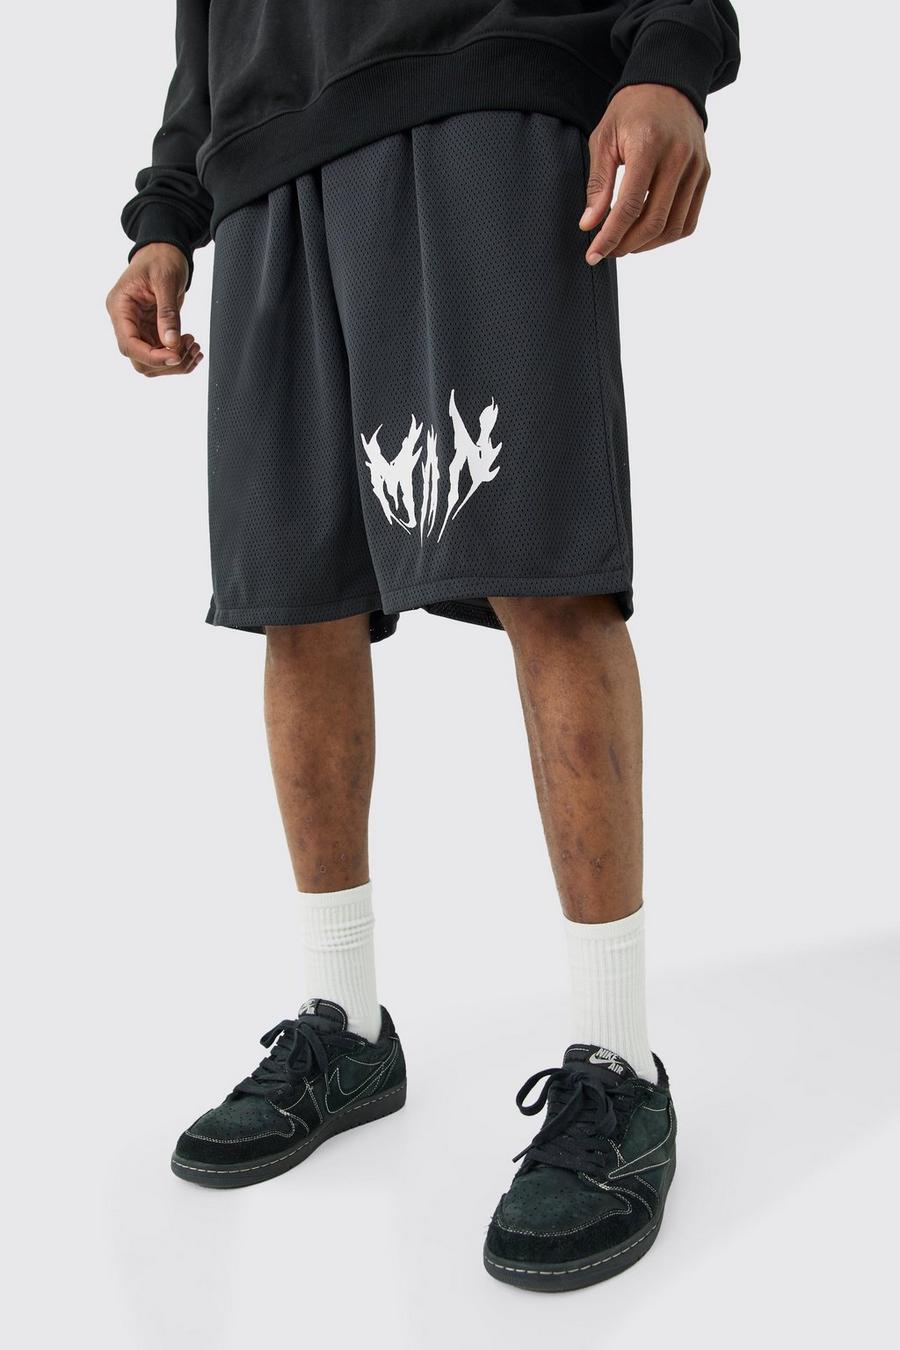 Pantalón corto Tall MAN de airtéx con estampado de baloncesto, Black image number 1